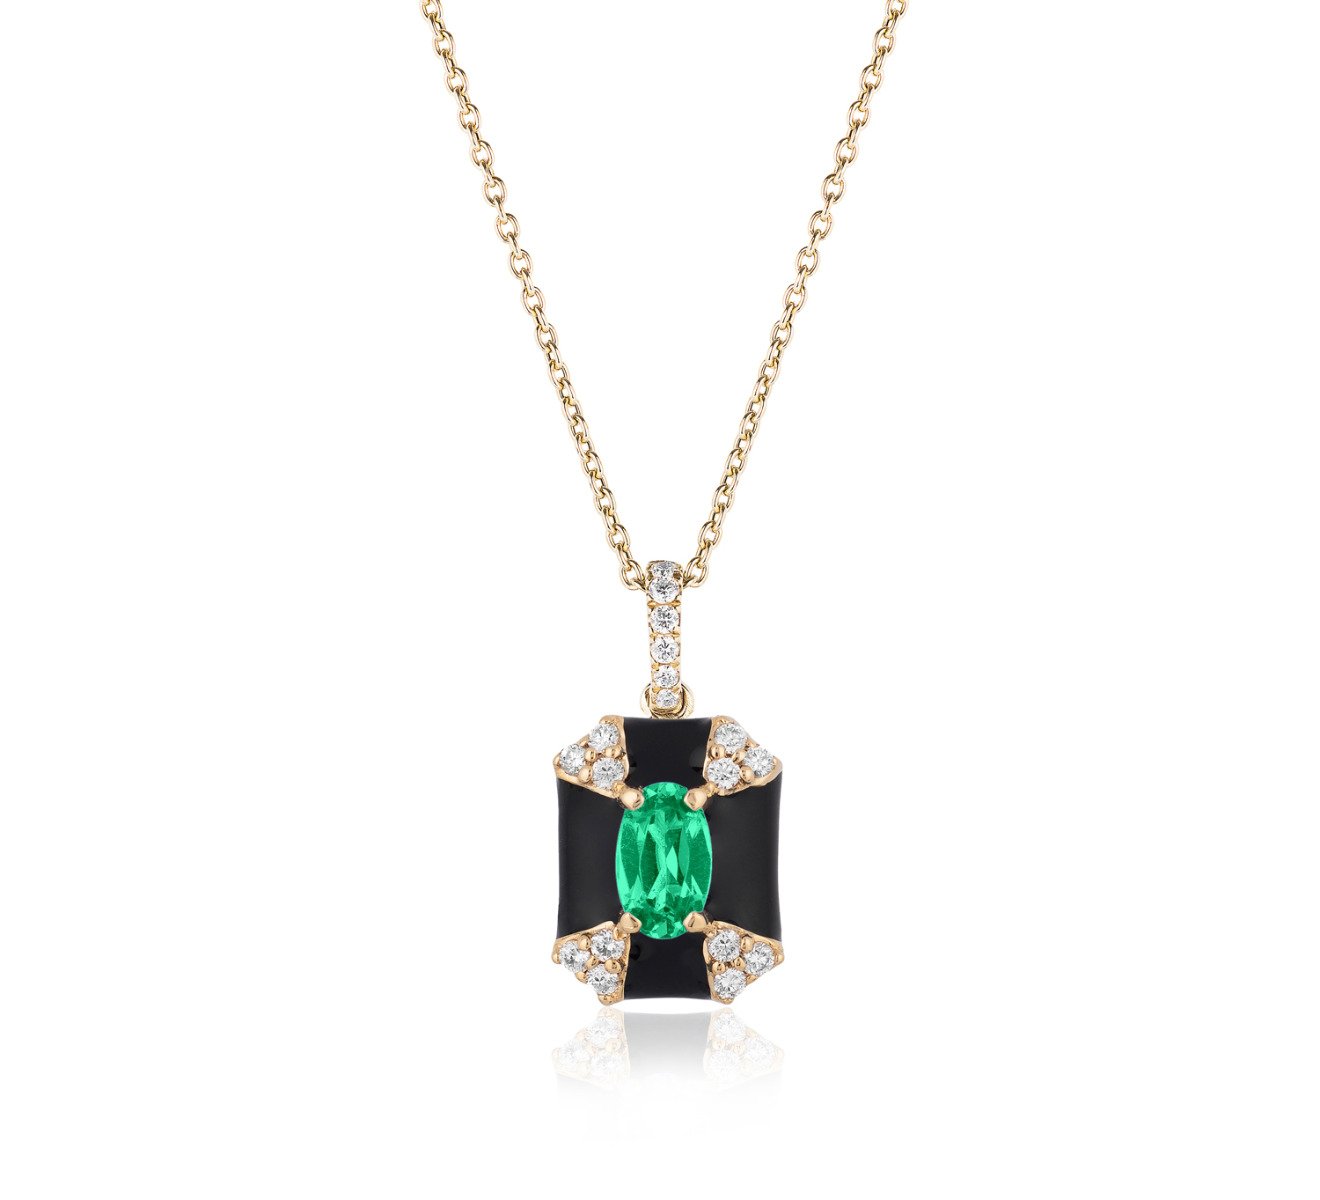 Goshwara "Queen" Octagon Black Enamel Pendant Necklace with Emerald and Diamond